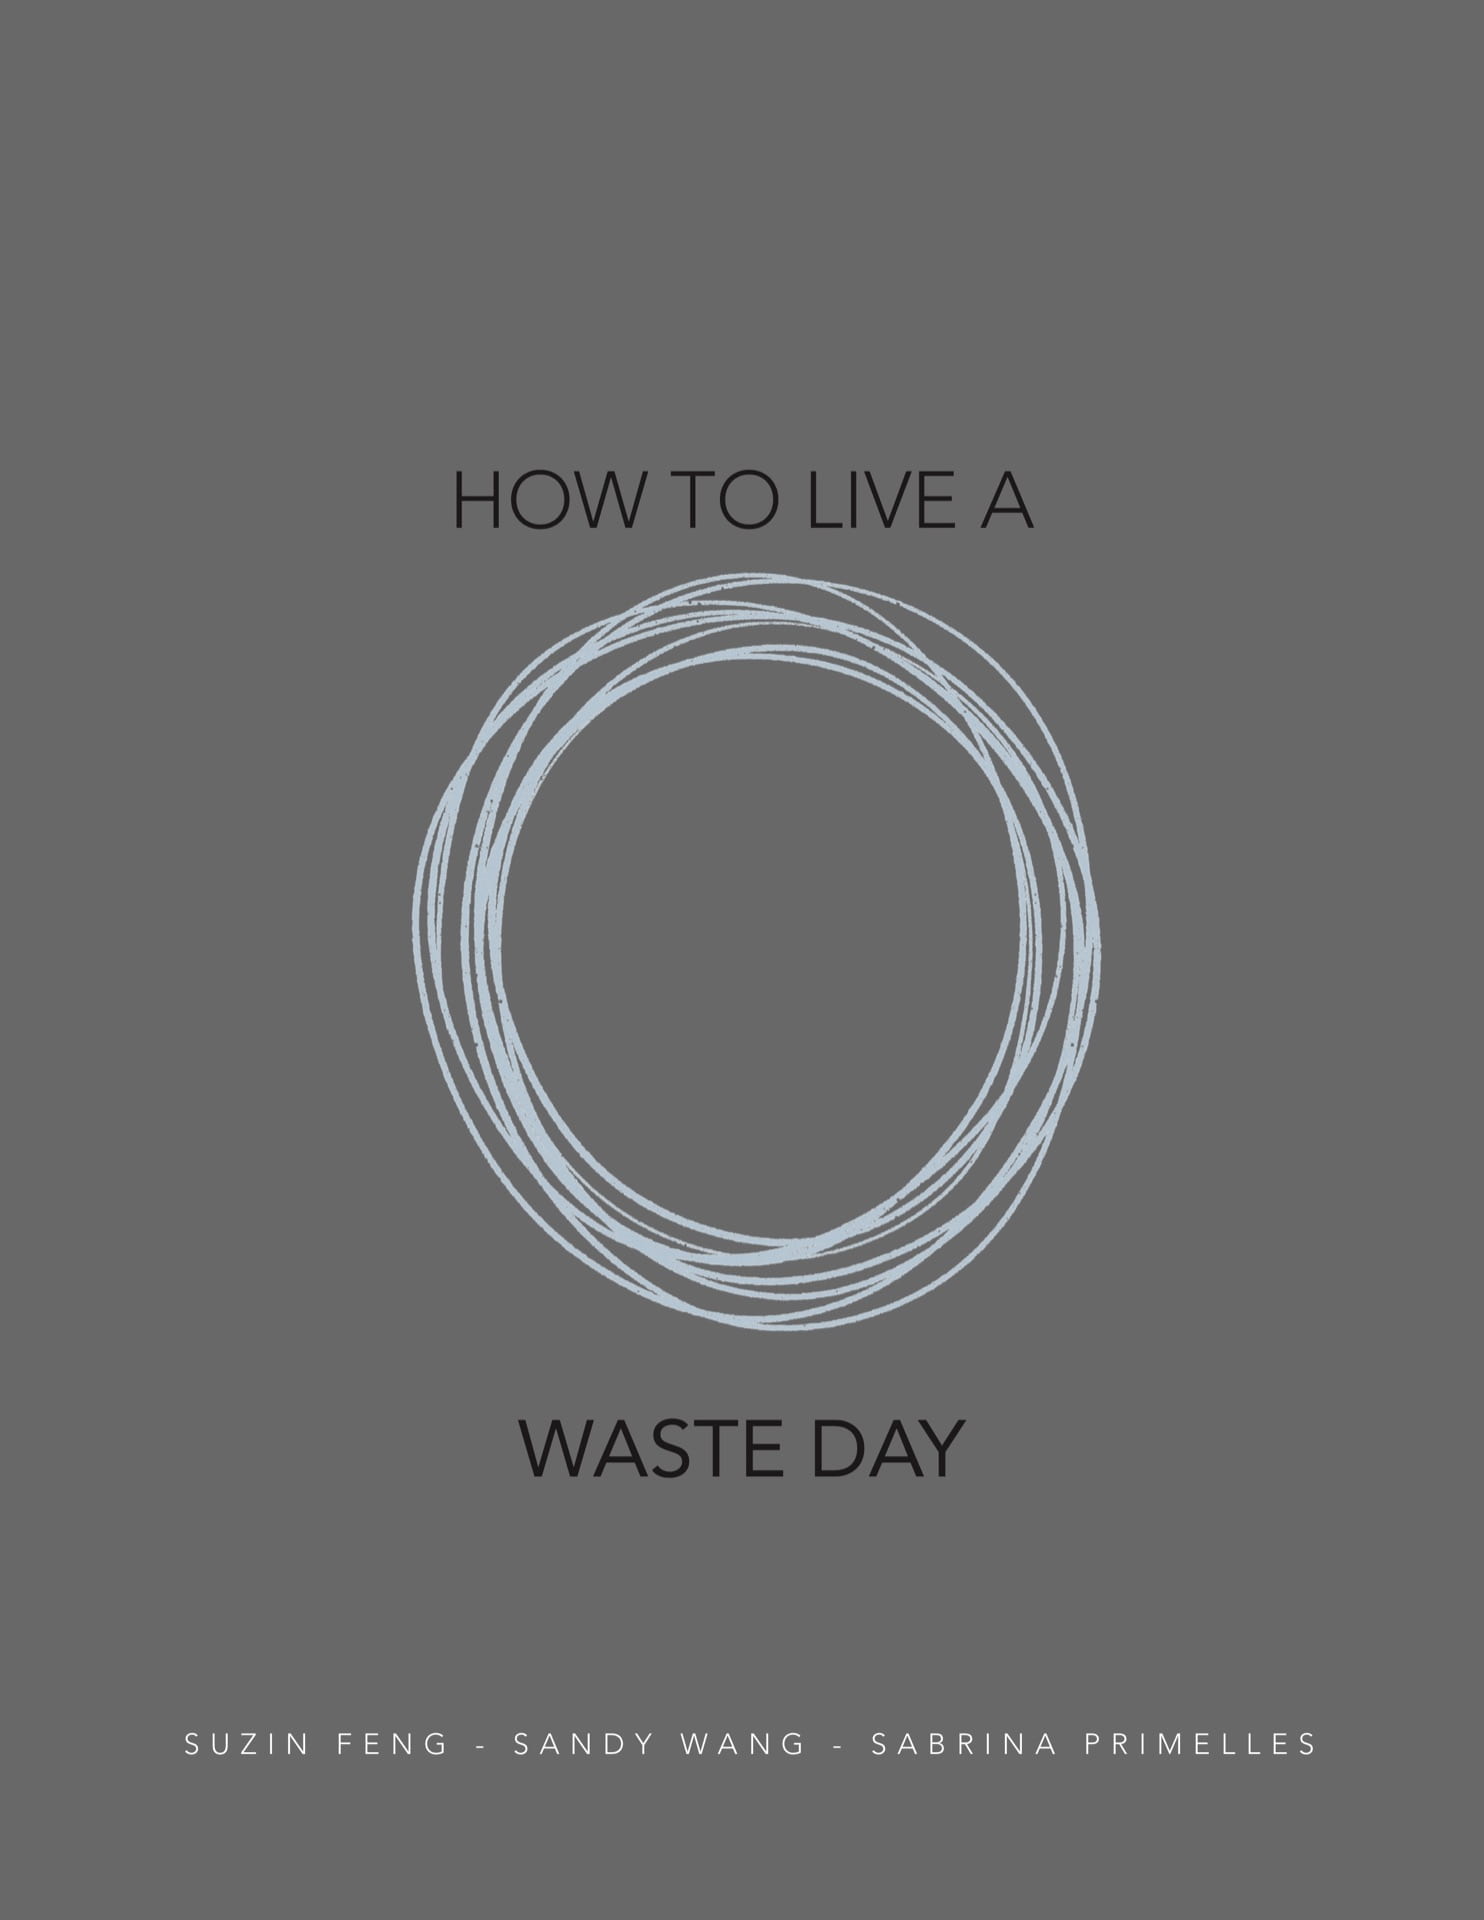 A Zero Waste Day